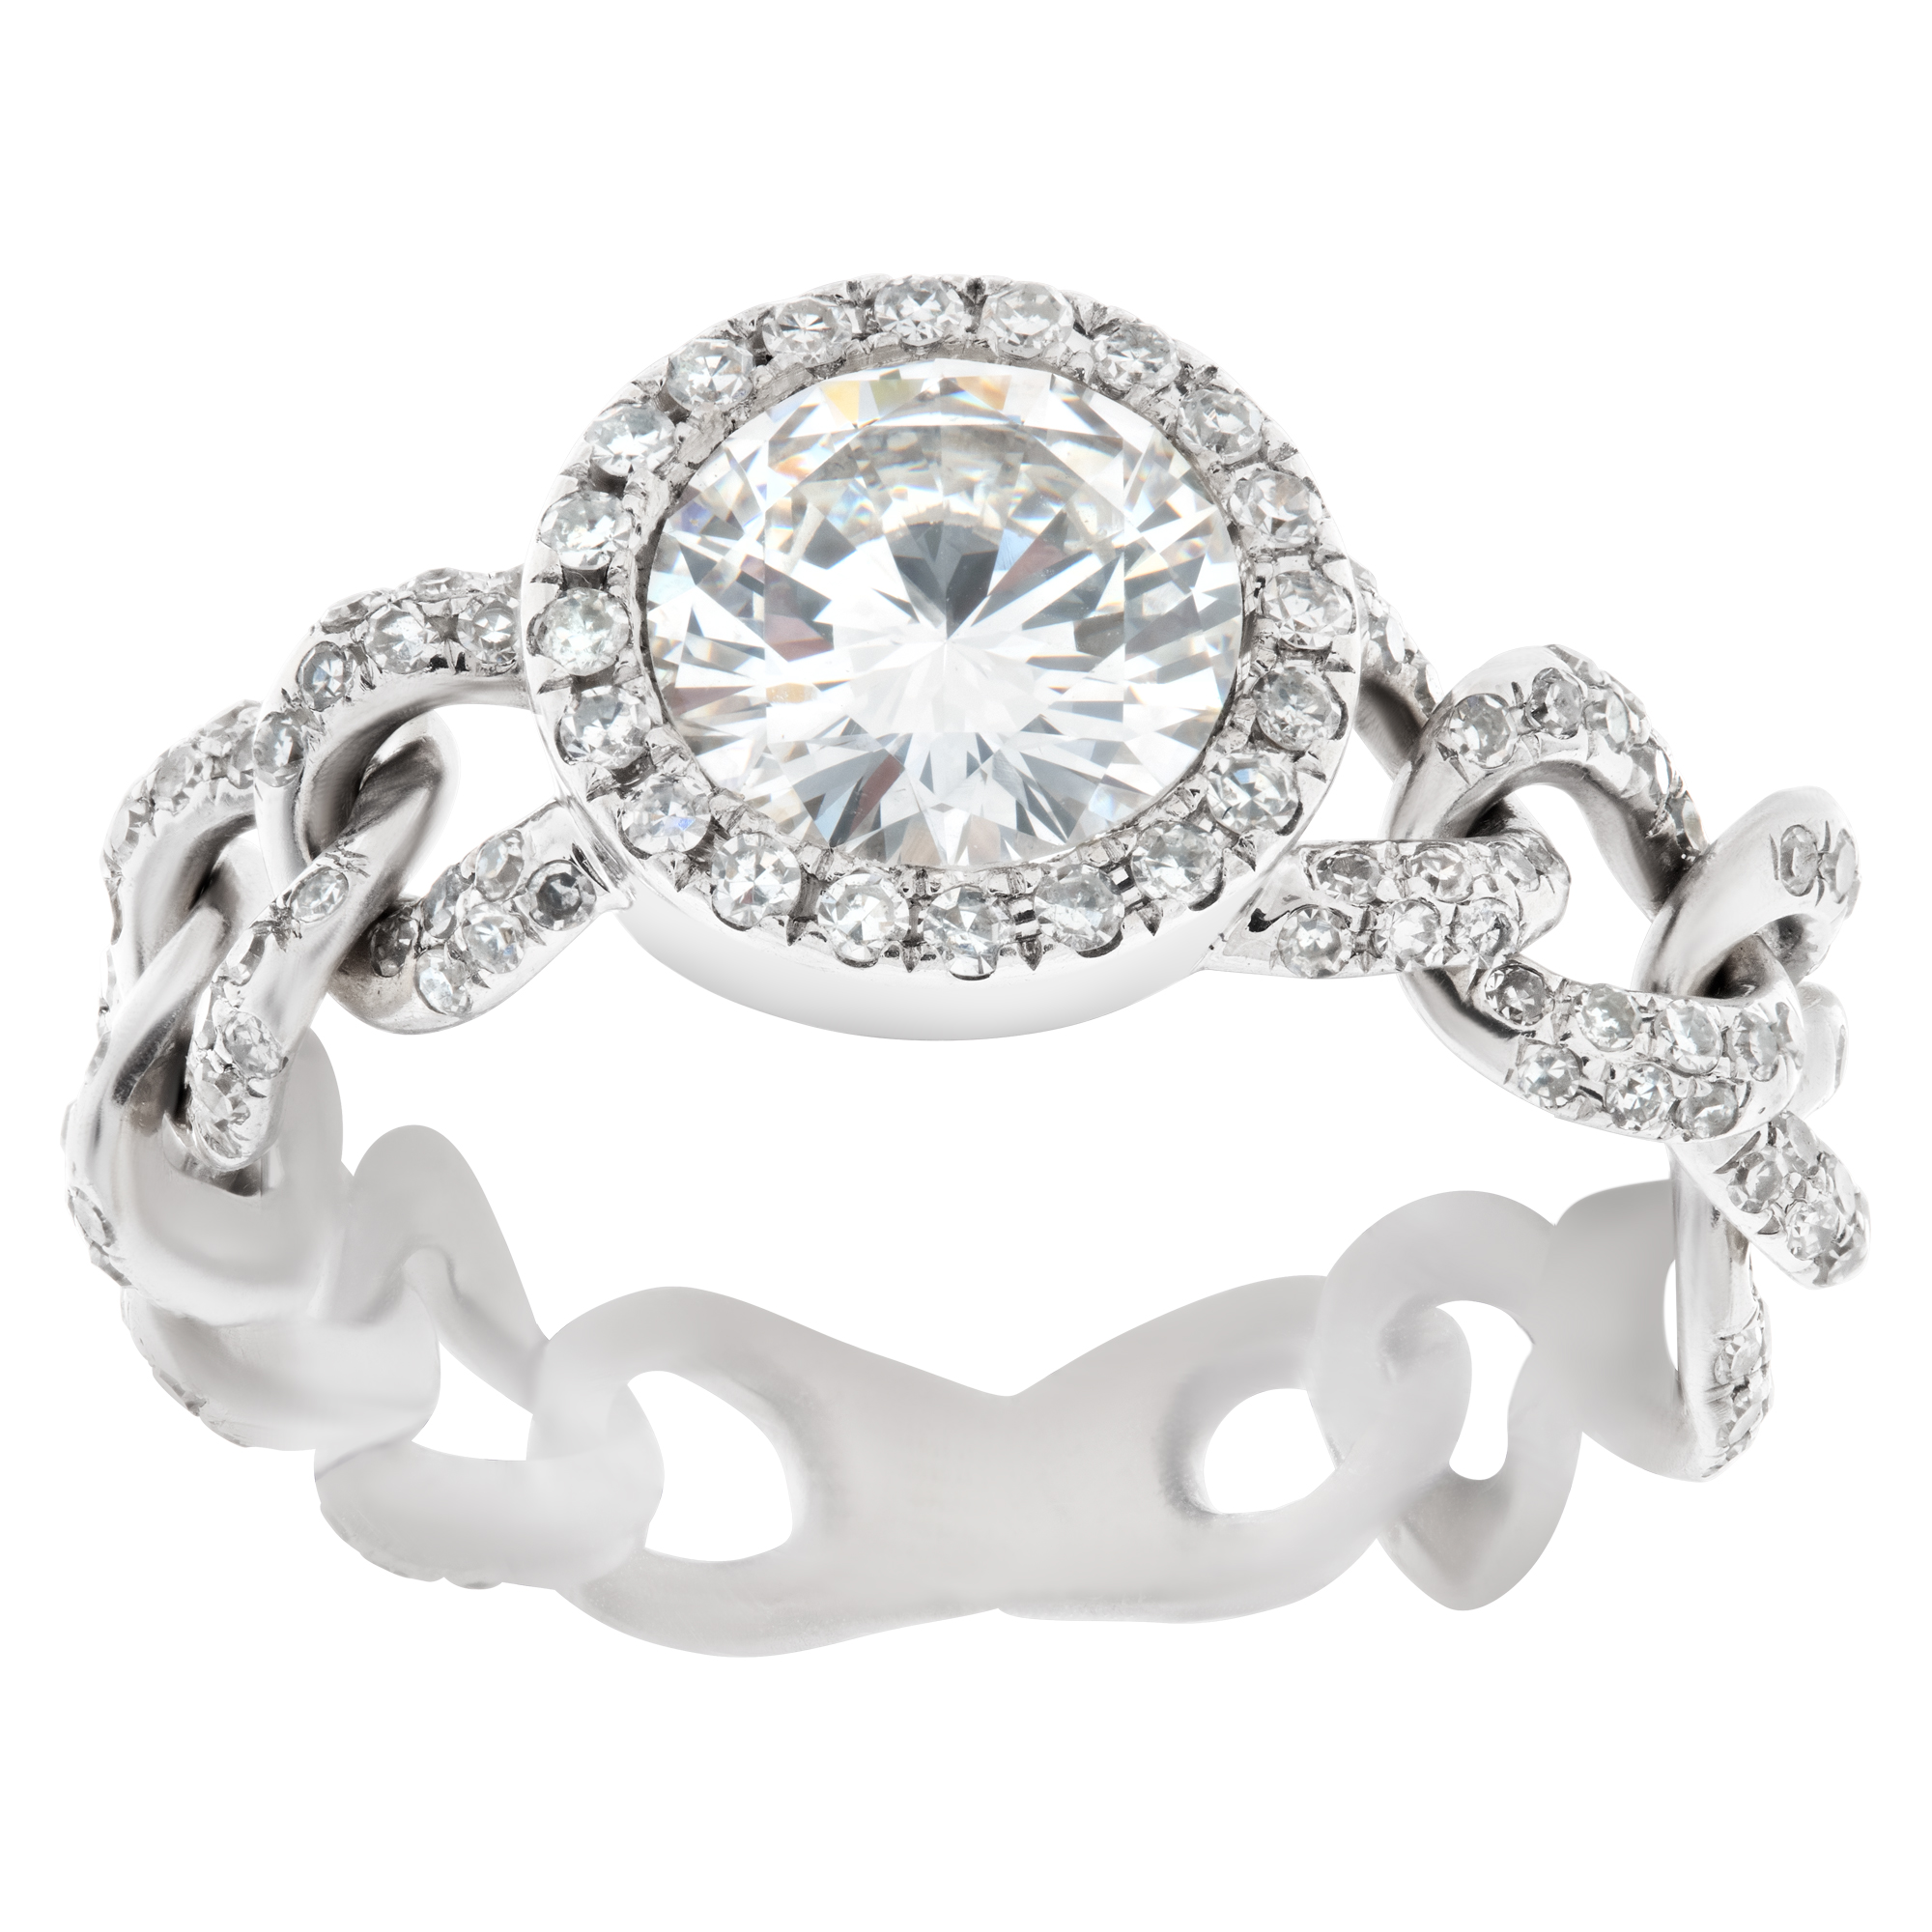 GIA certified round brilliant cut diamond 1.17 carat (E color, VS2 clarity) ring